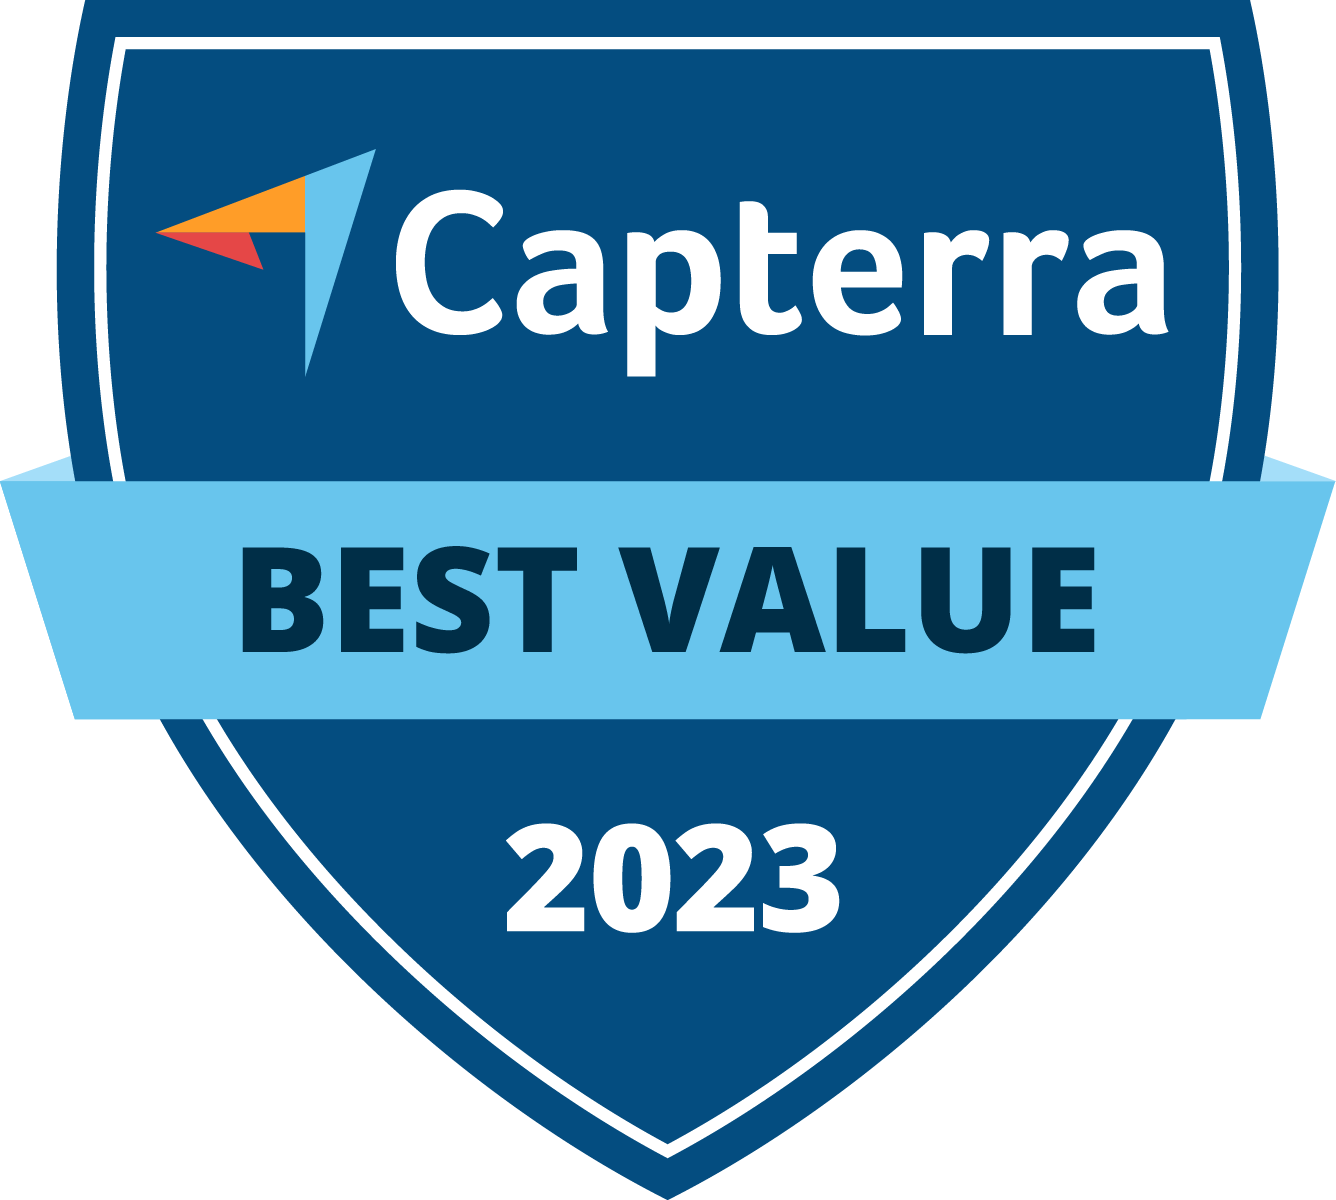 Capterra Best Value 2023 Badge, awarded to HighQ